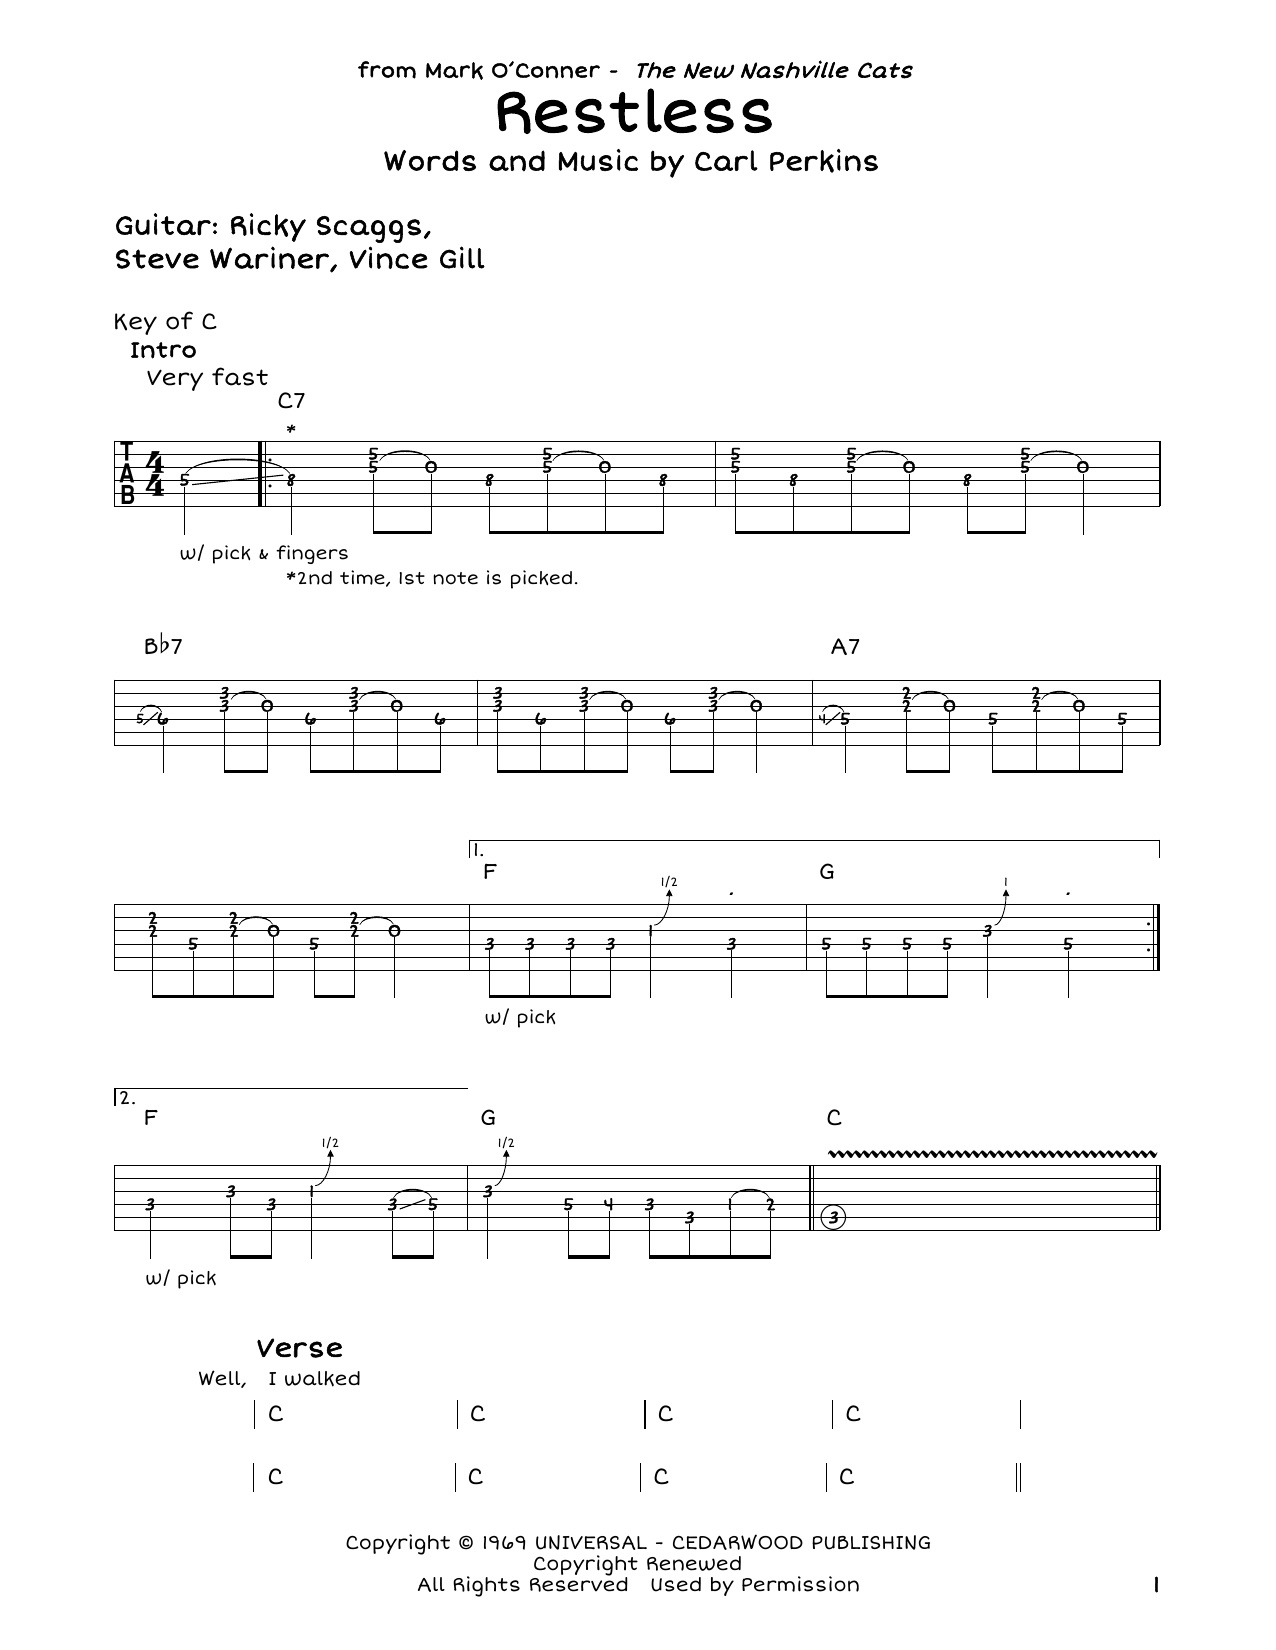 Carl Perkins Restless Sheet Music Notes & Chords for Guitar Tab - Download or Print PDF